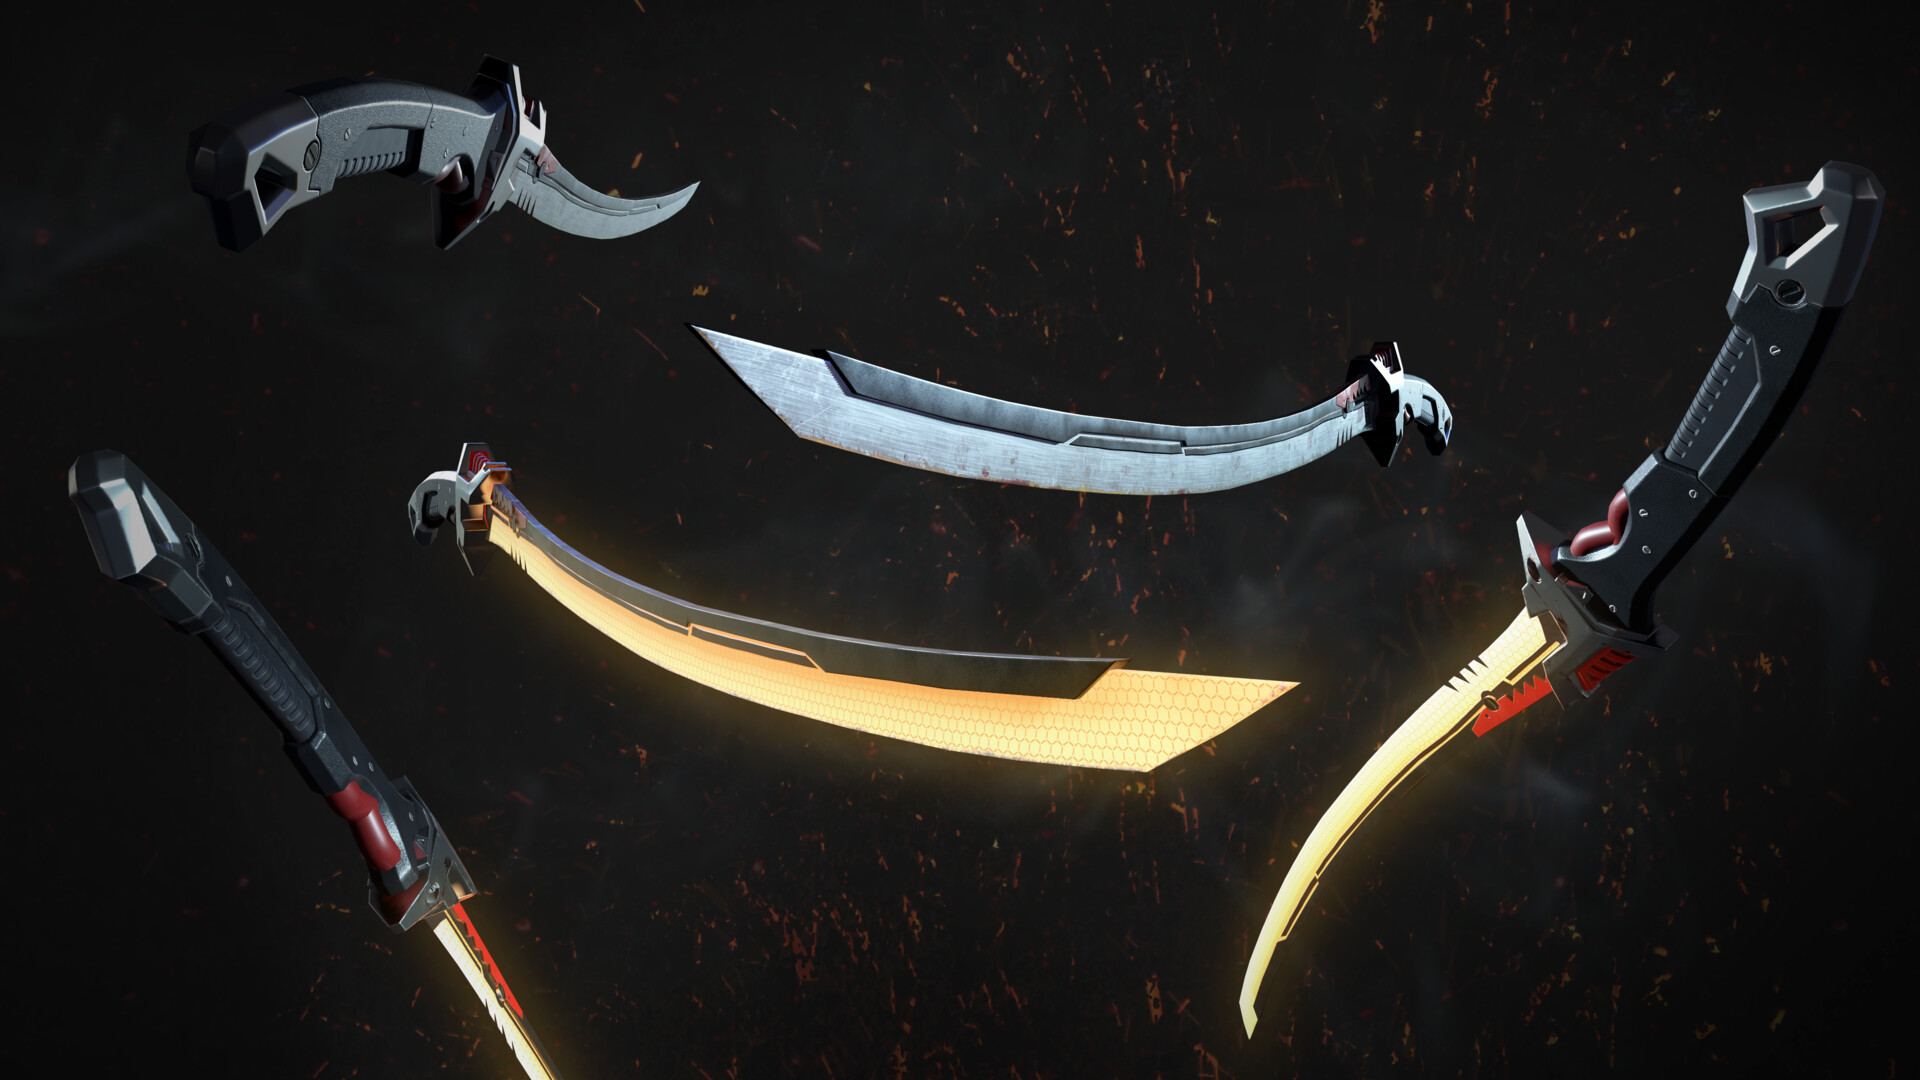 Sci Fi katana / futuristic sword (by existing concept)